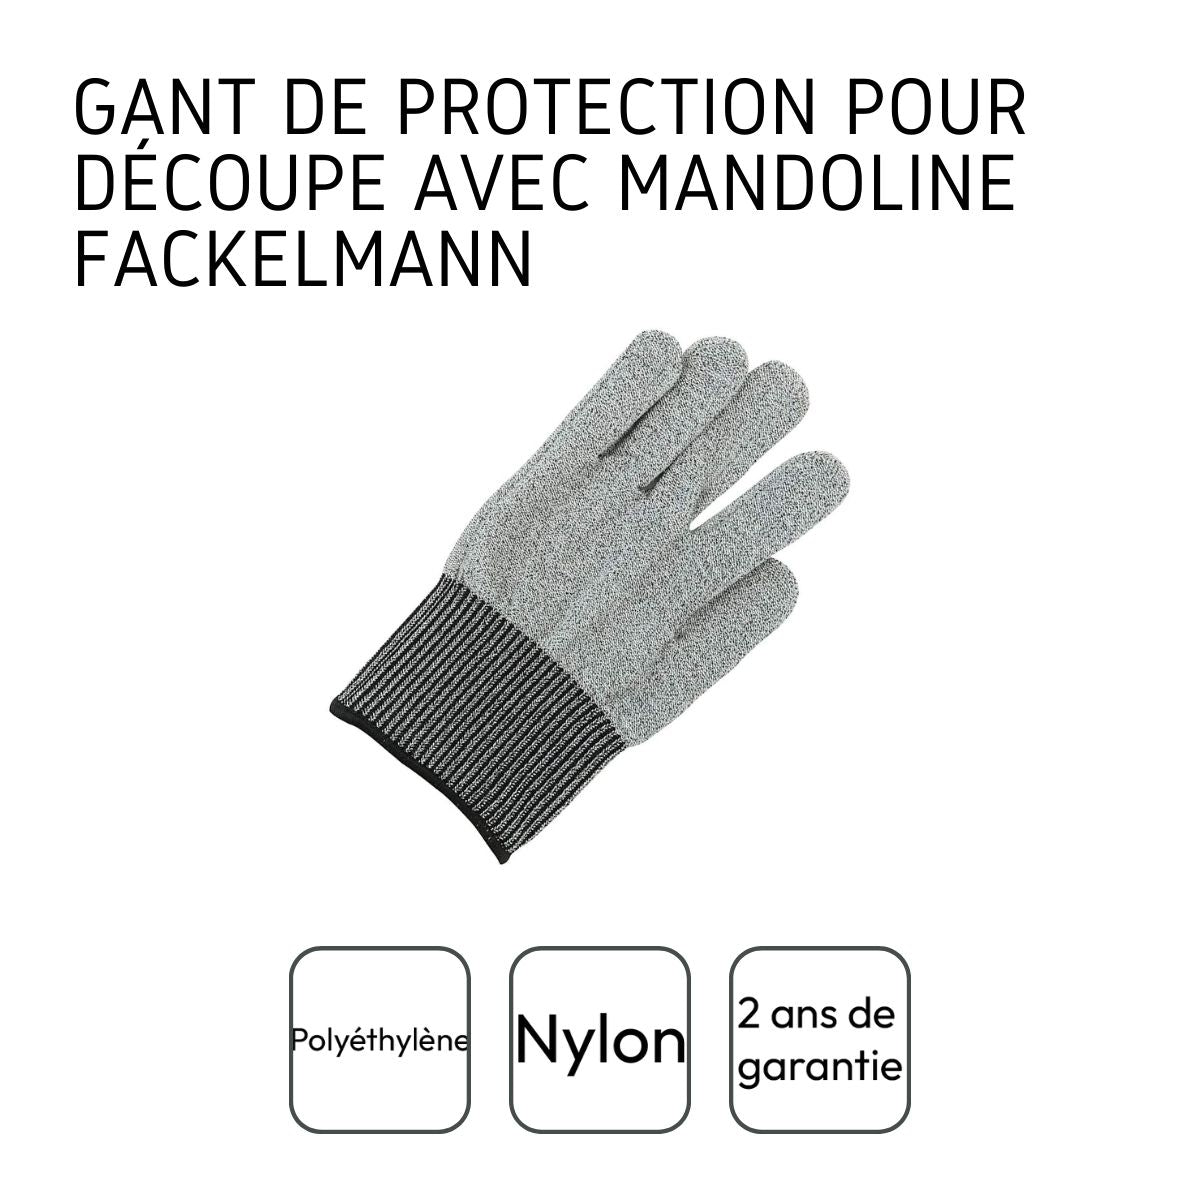 Gant anti-coupures Fackelmann